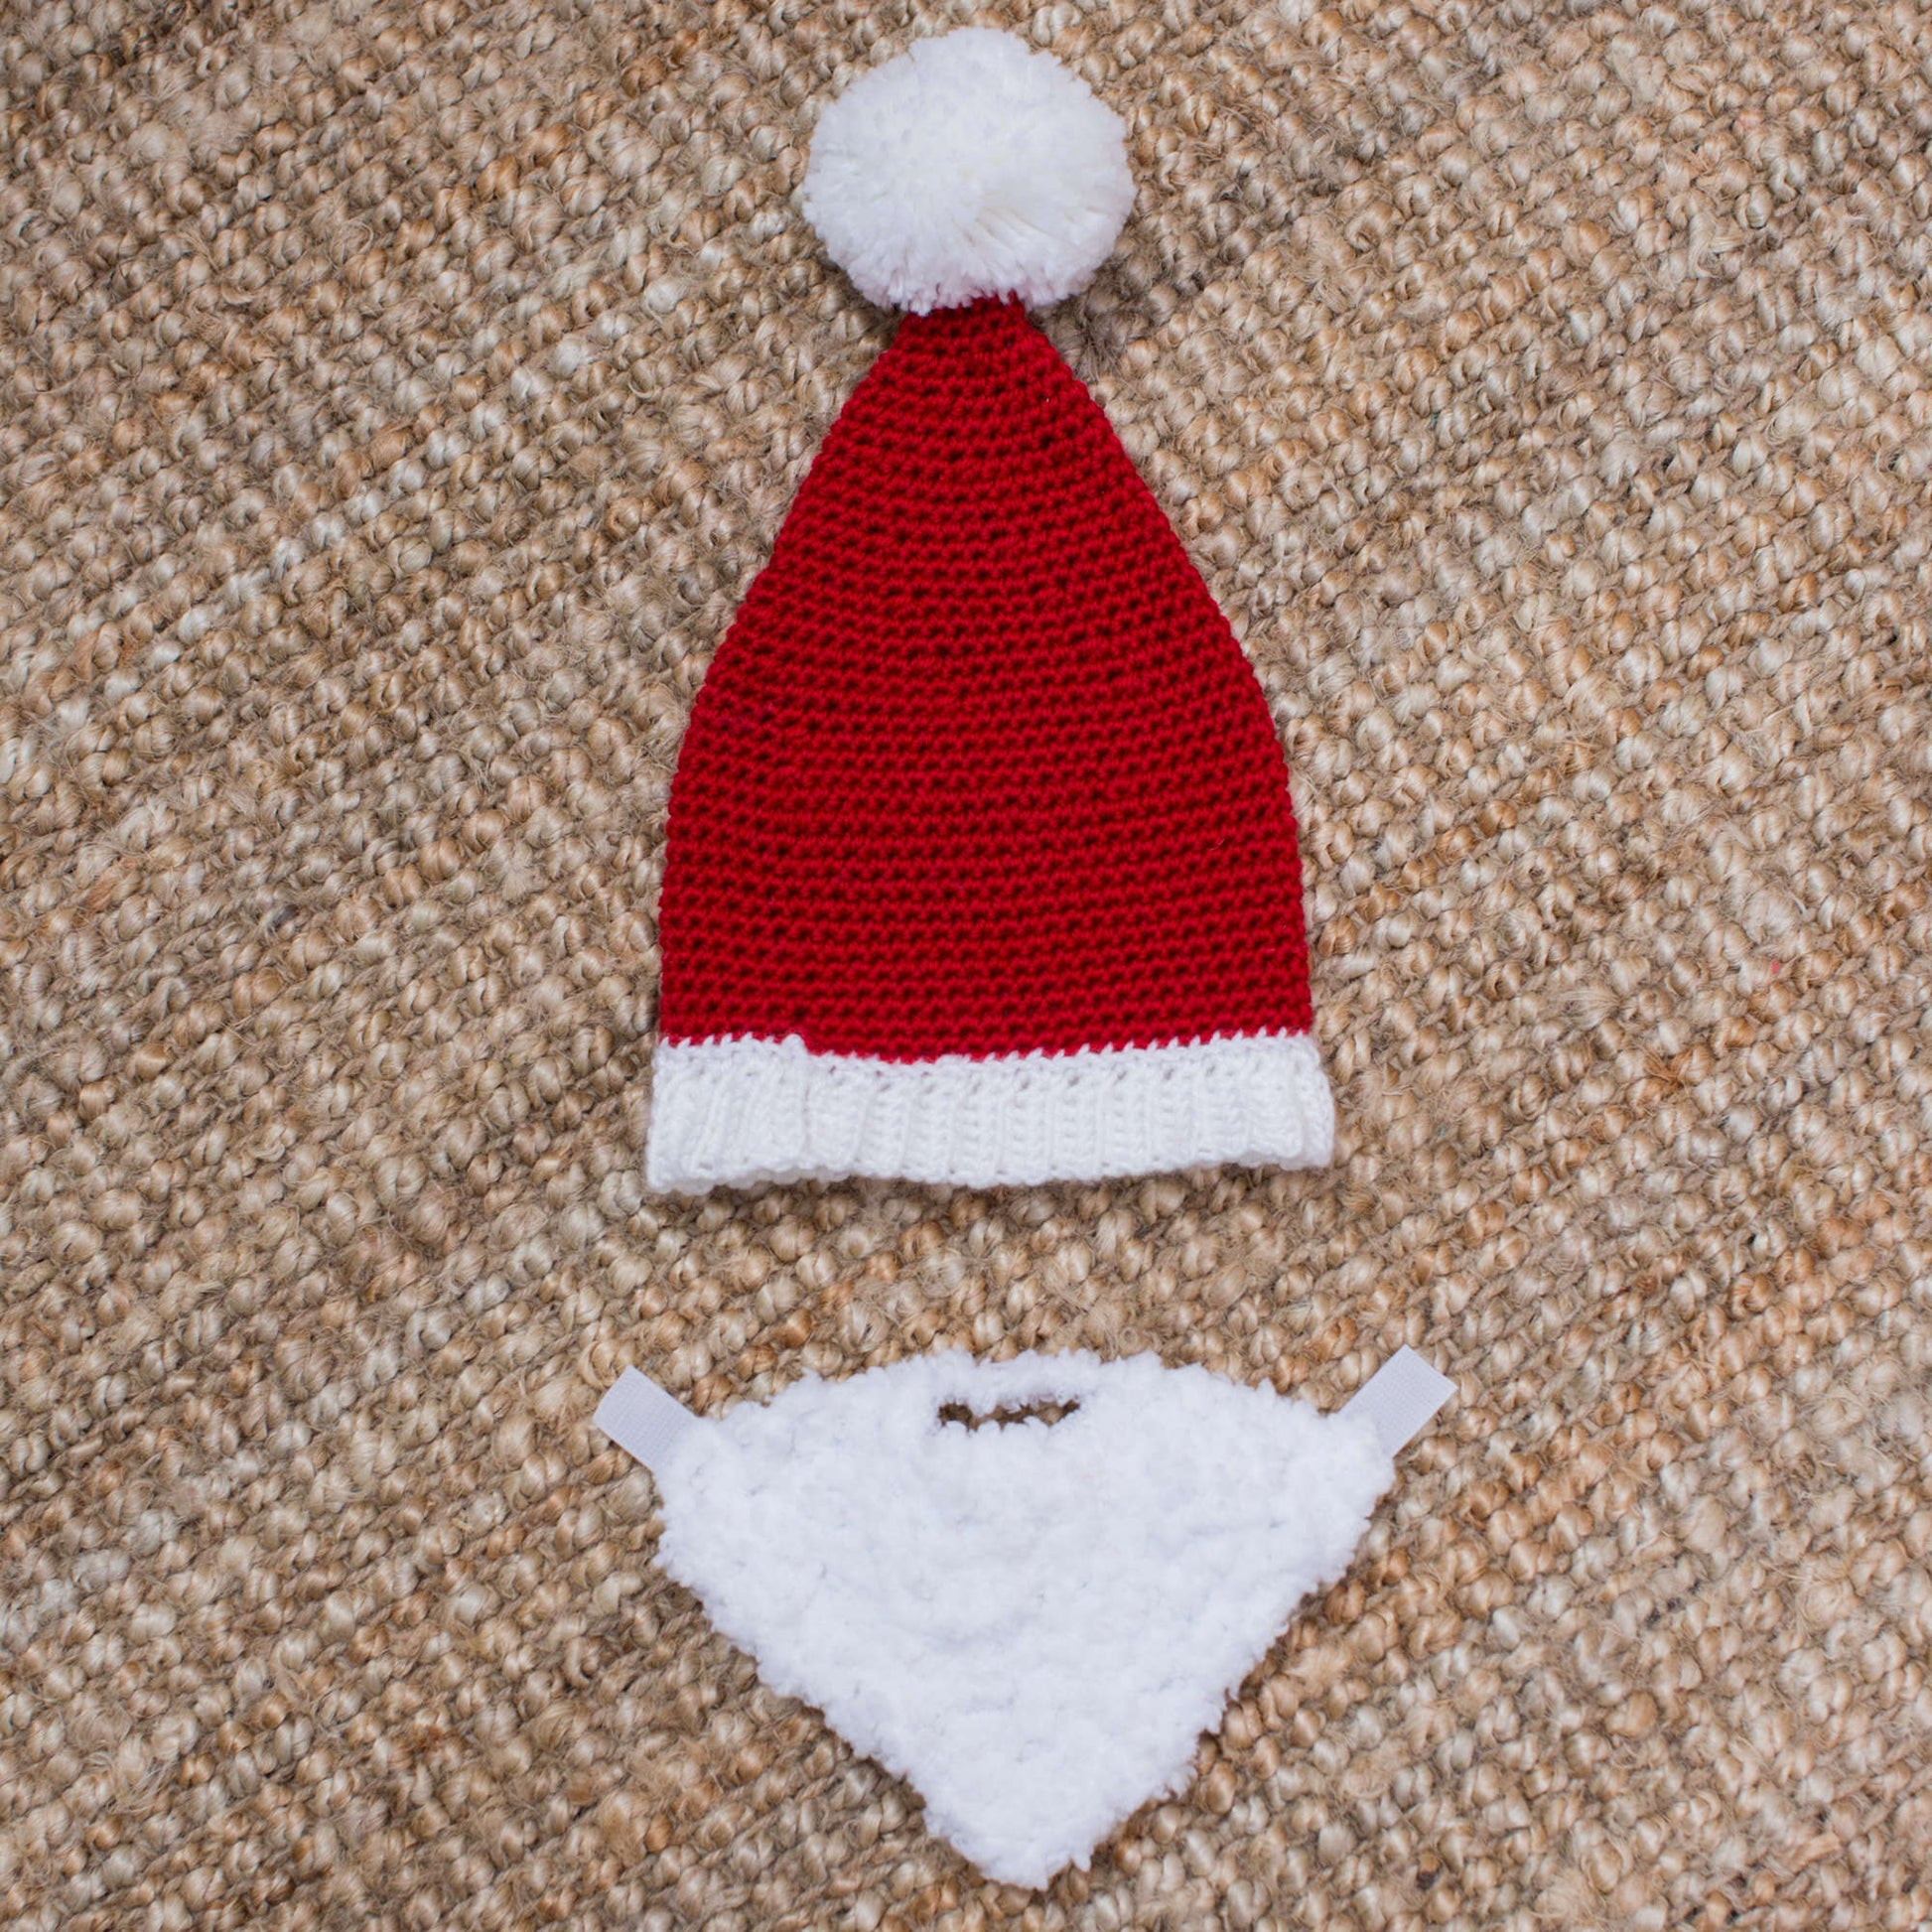 Free Red Heart Baby Santa Hat With Beard Crochet Pattern